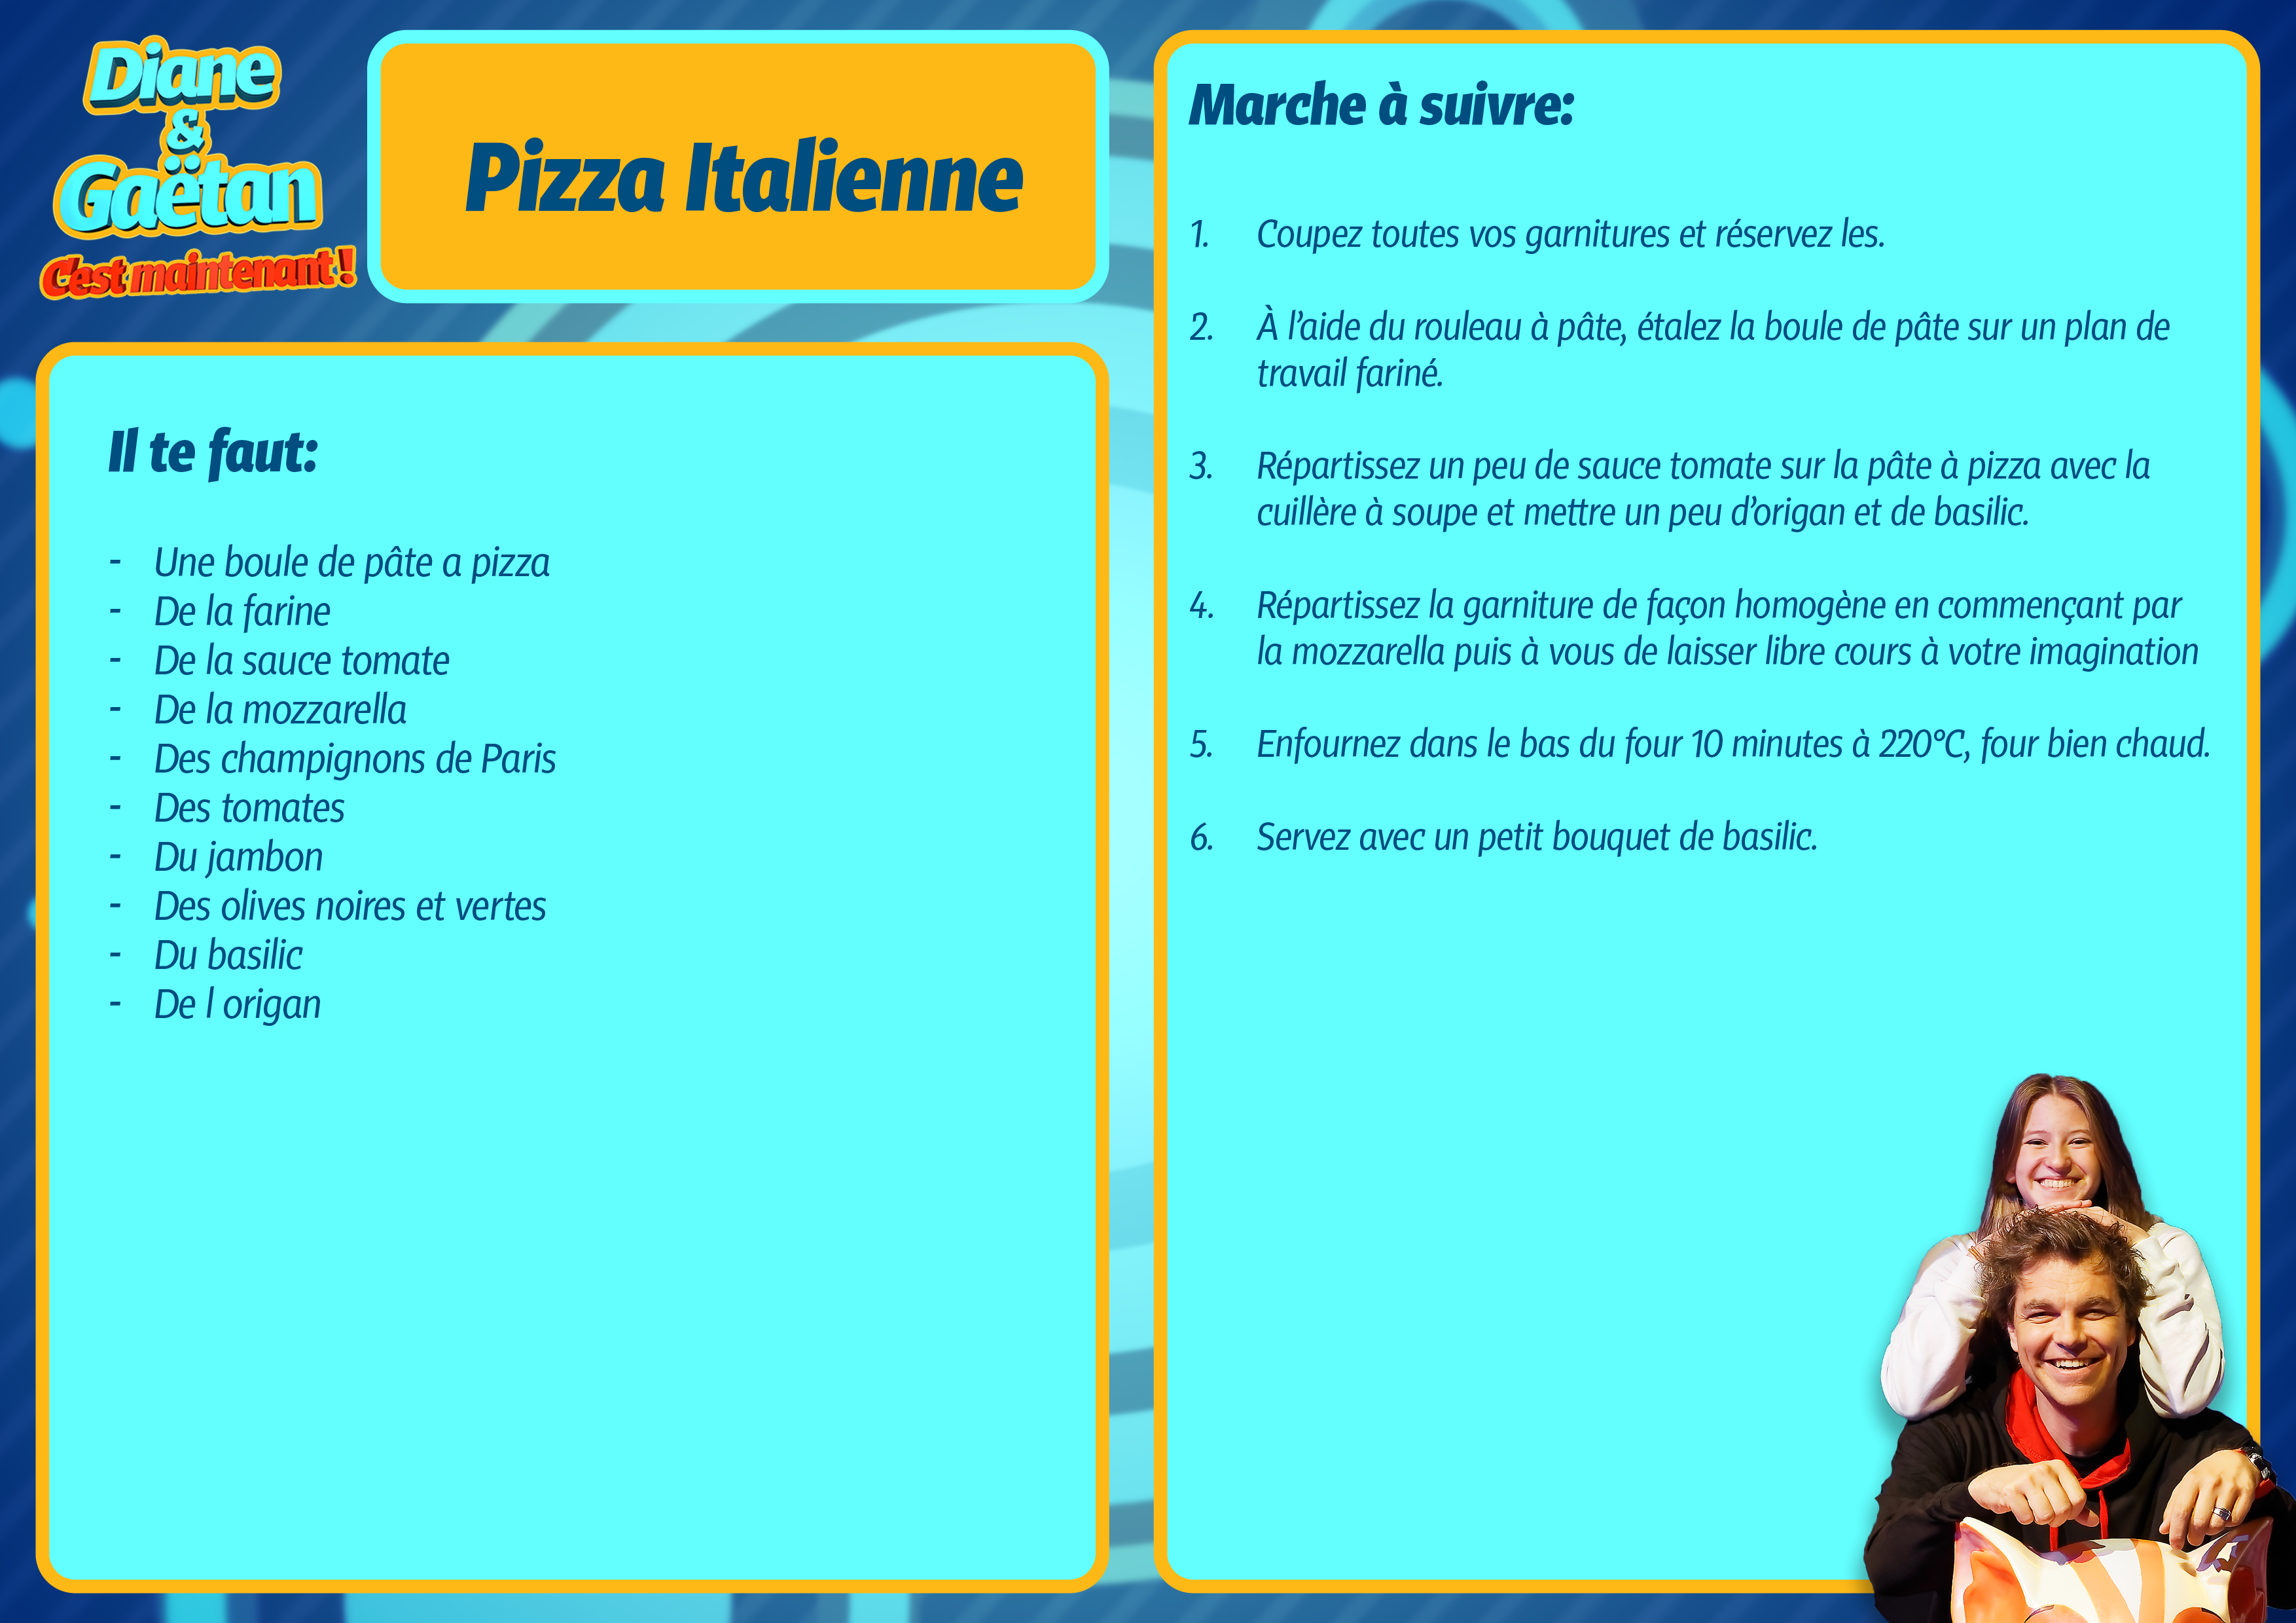 La pizza italienne